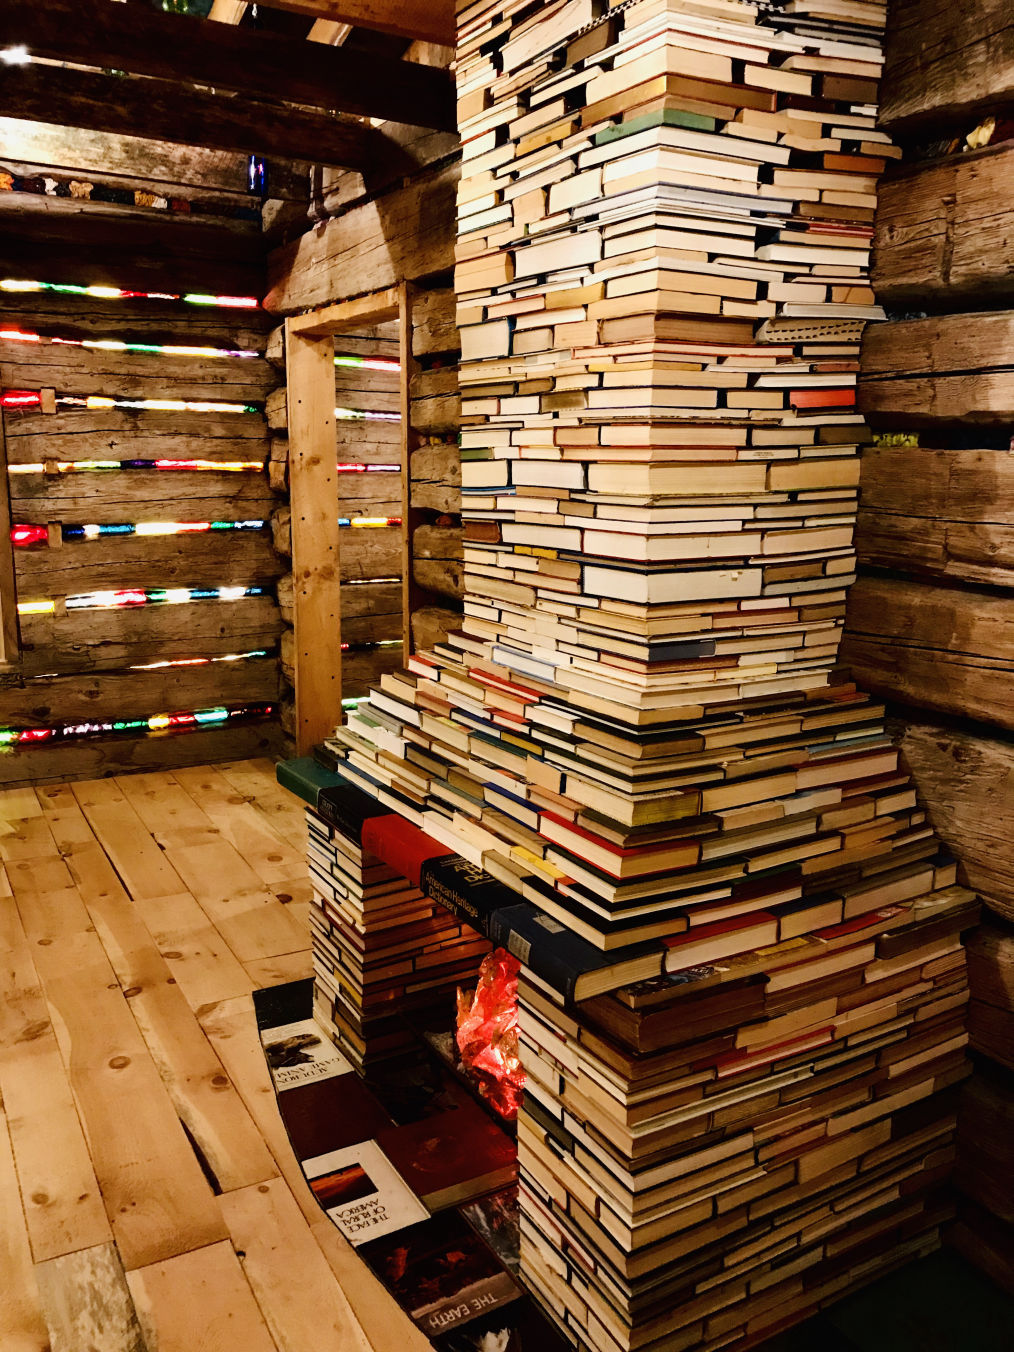 Fireplace of Books in Slumgullion